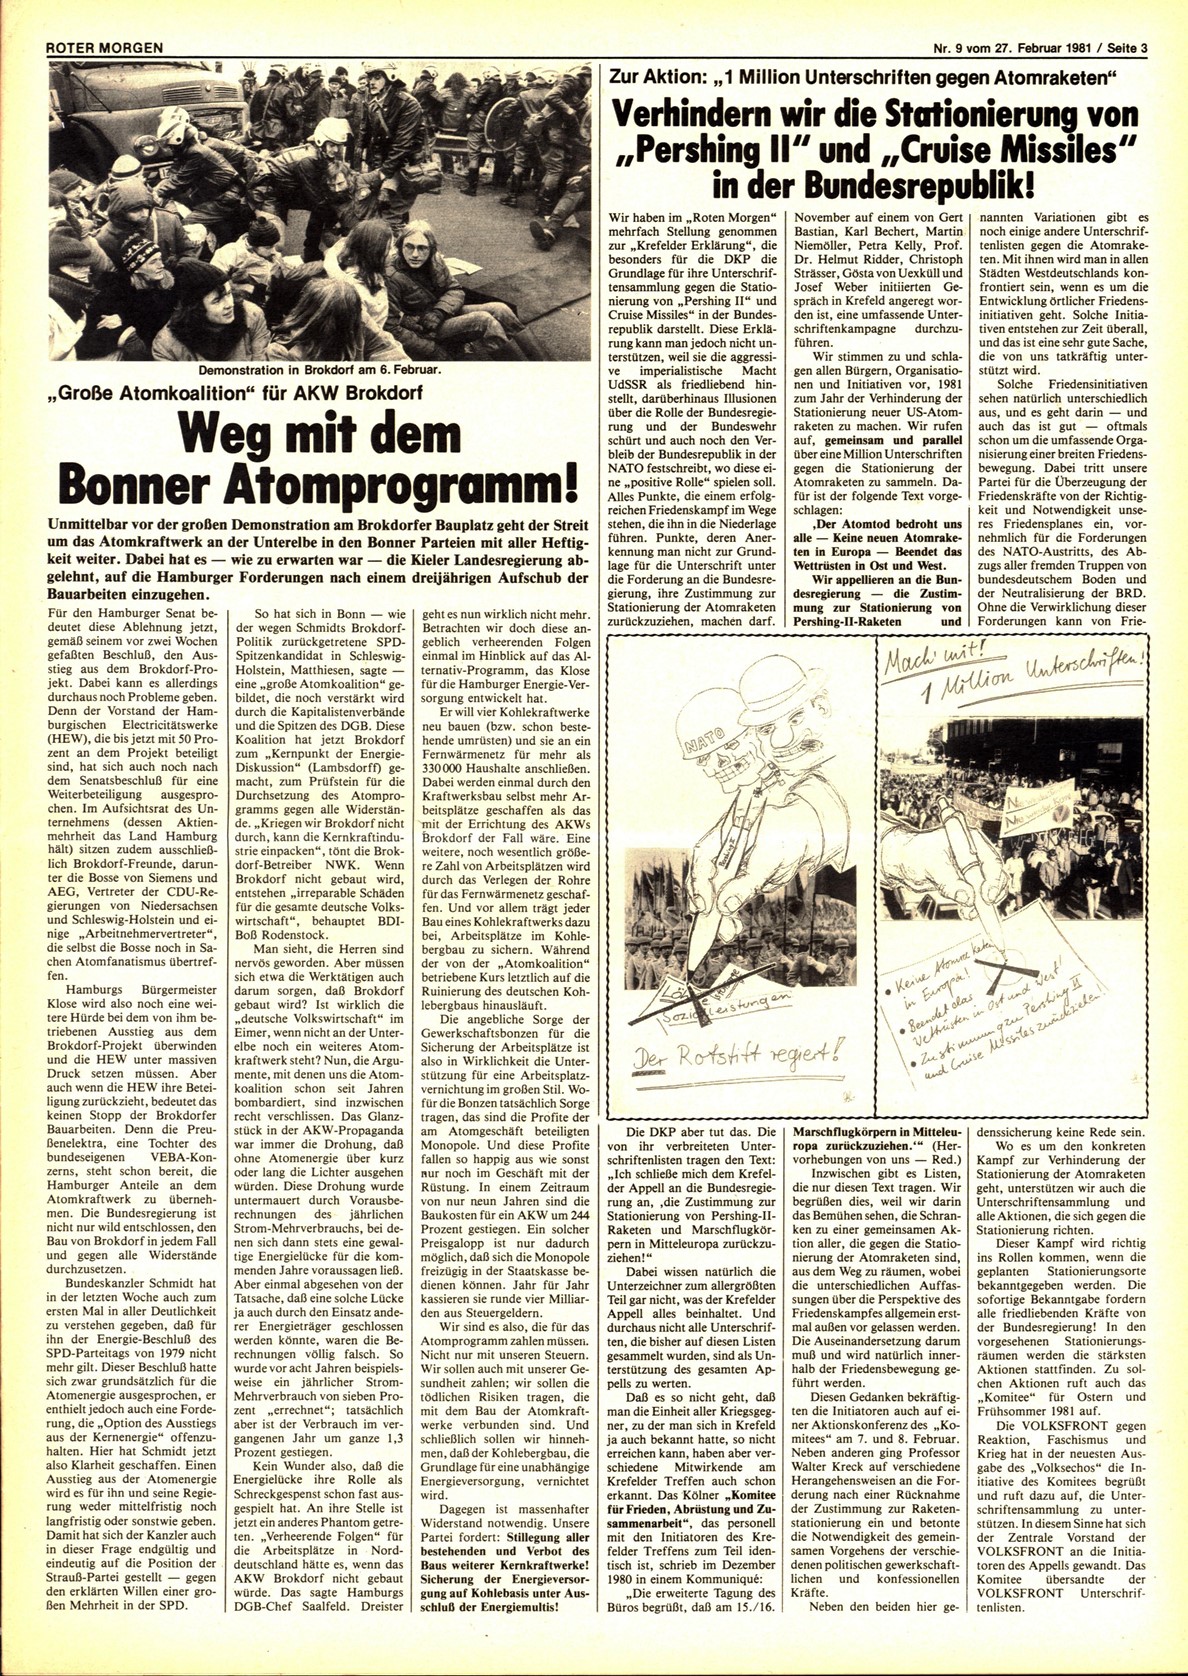 Roter Morgen, 15. Jg., 27. Februar 1981, Nr. 9, Seite 3